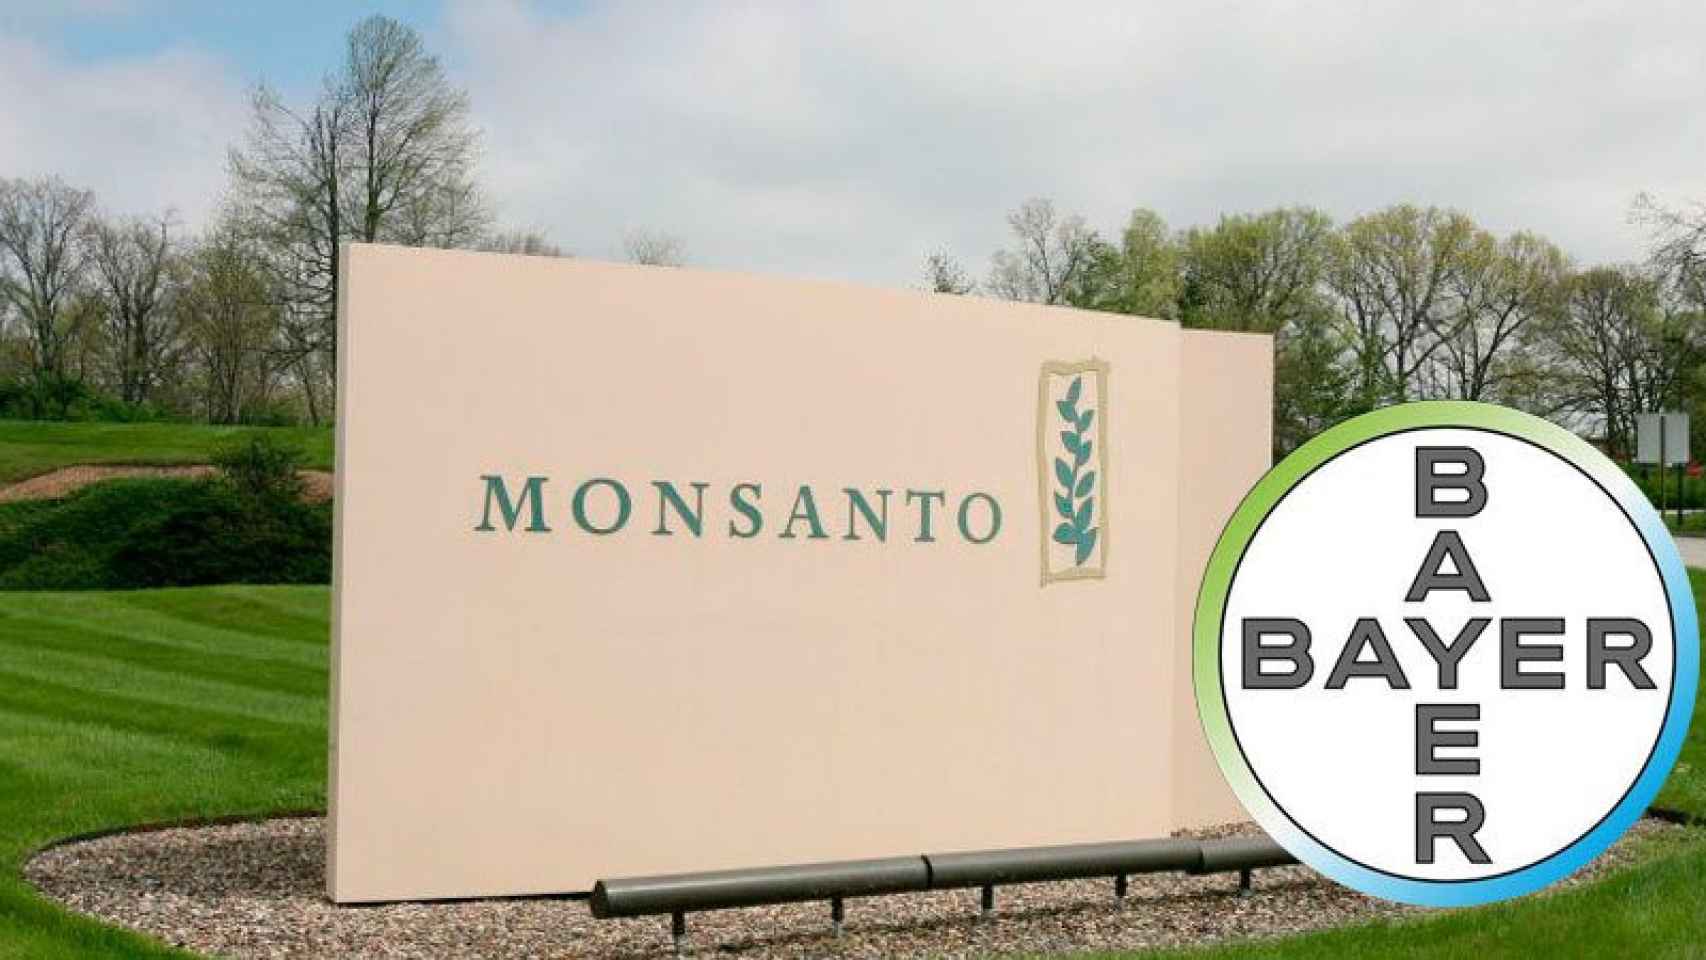 La farmacéutica alemana Bayer adquirió la empresa Monsanto / FOTOMONTAJE DE CG